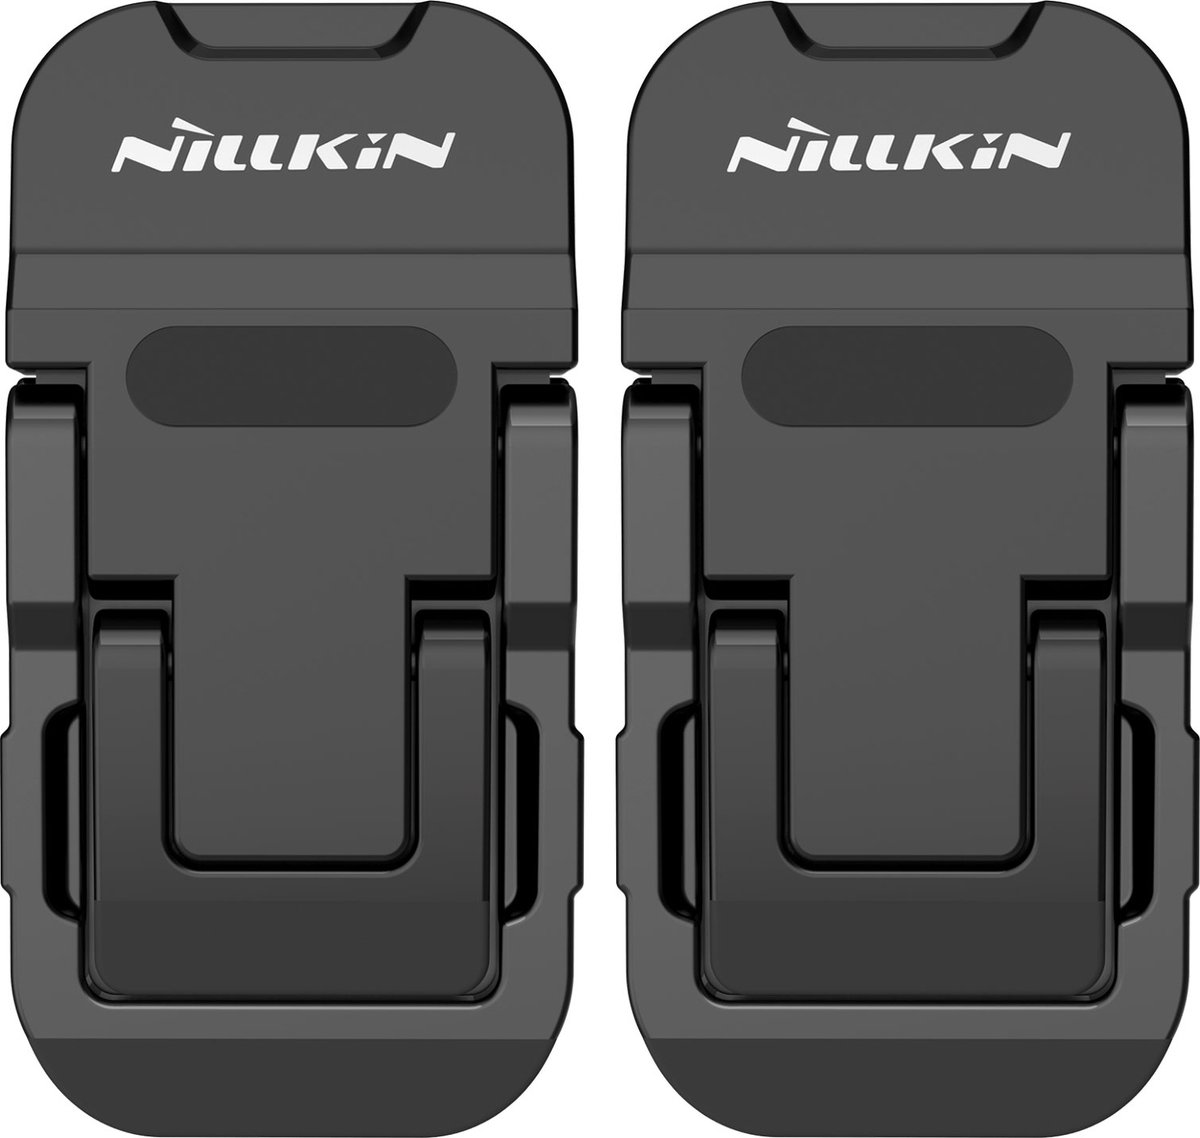 Nillkin - Universele Laptop Standaards - Verplaatsbaar - In hoogte verstelbaar - Voor Macbook of andere laptops - 2x Stand - Zwart